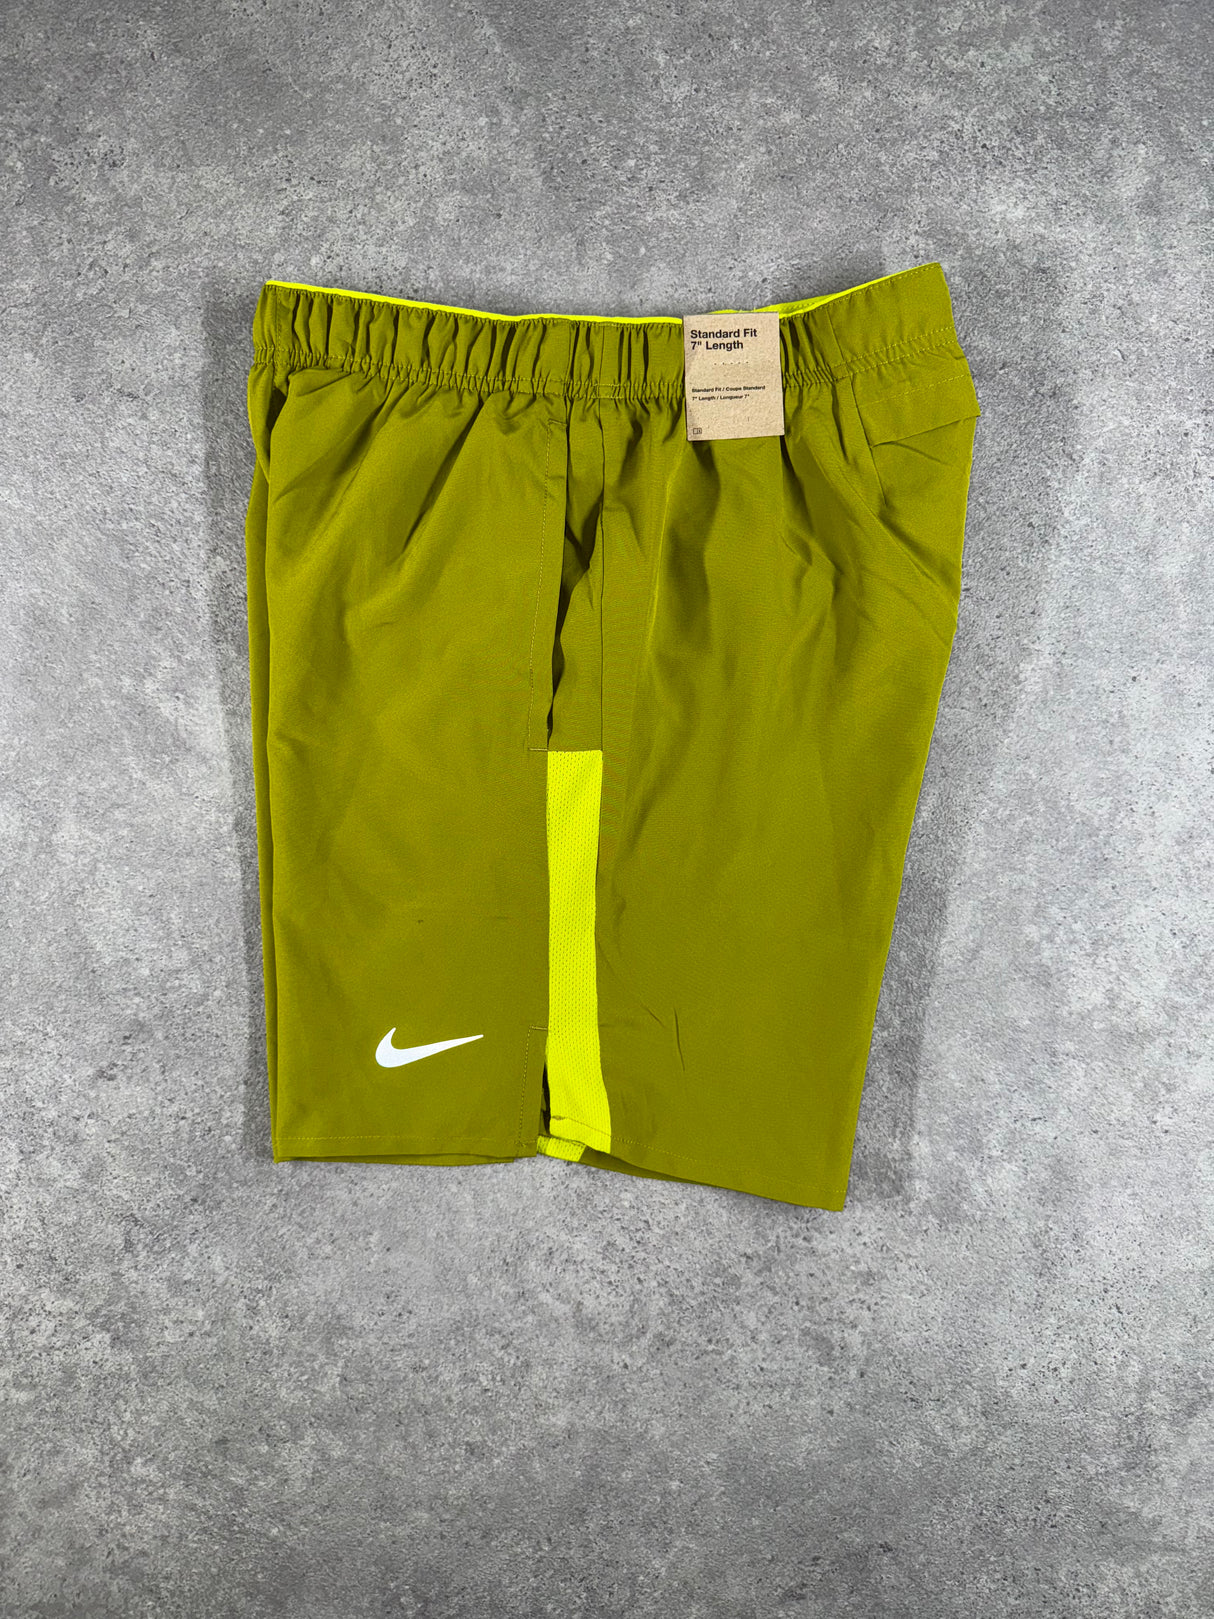 Nike Challenger Shorts - Yellow